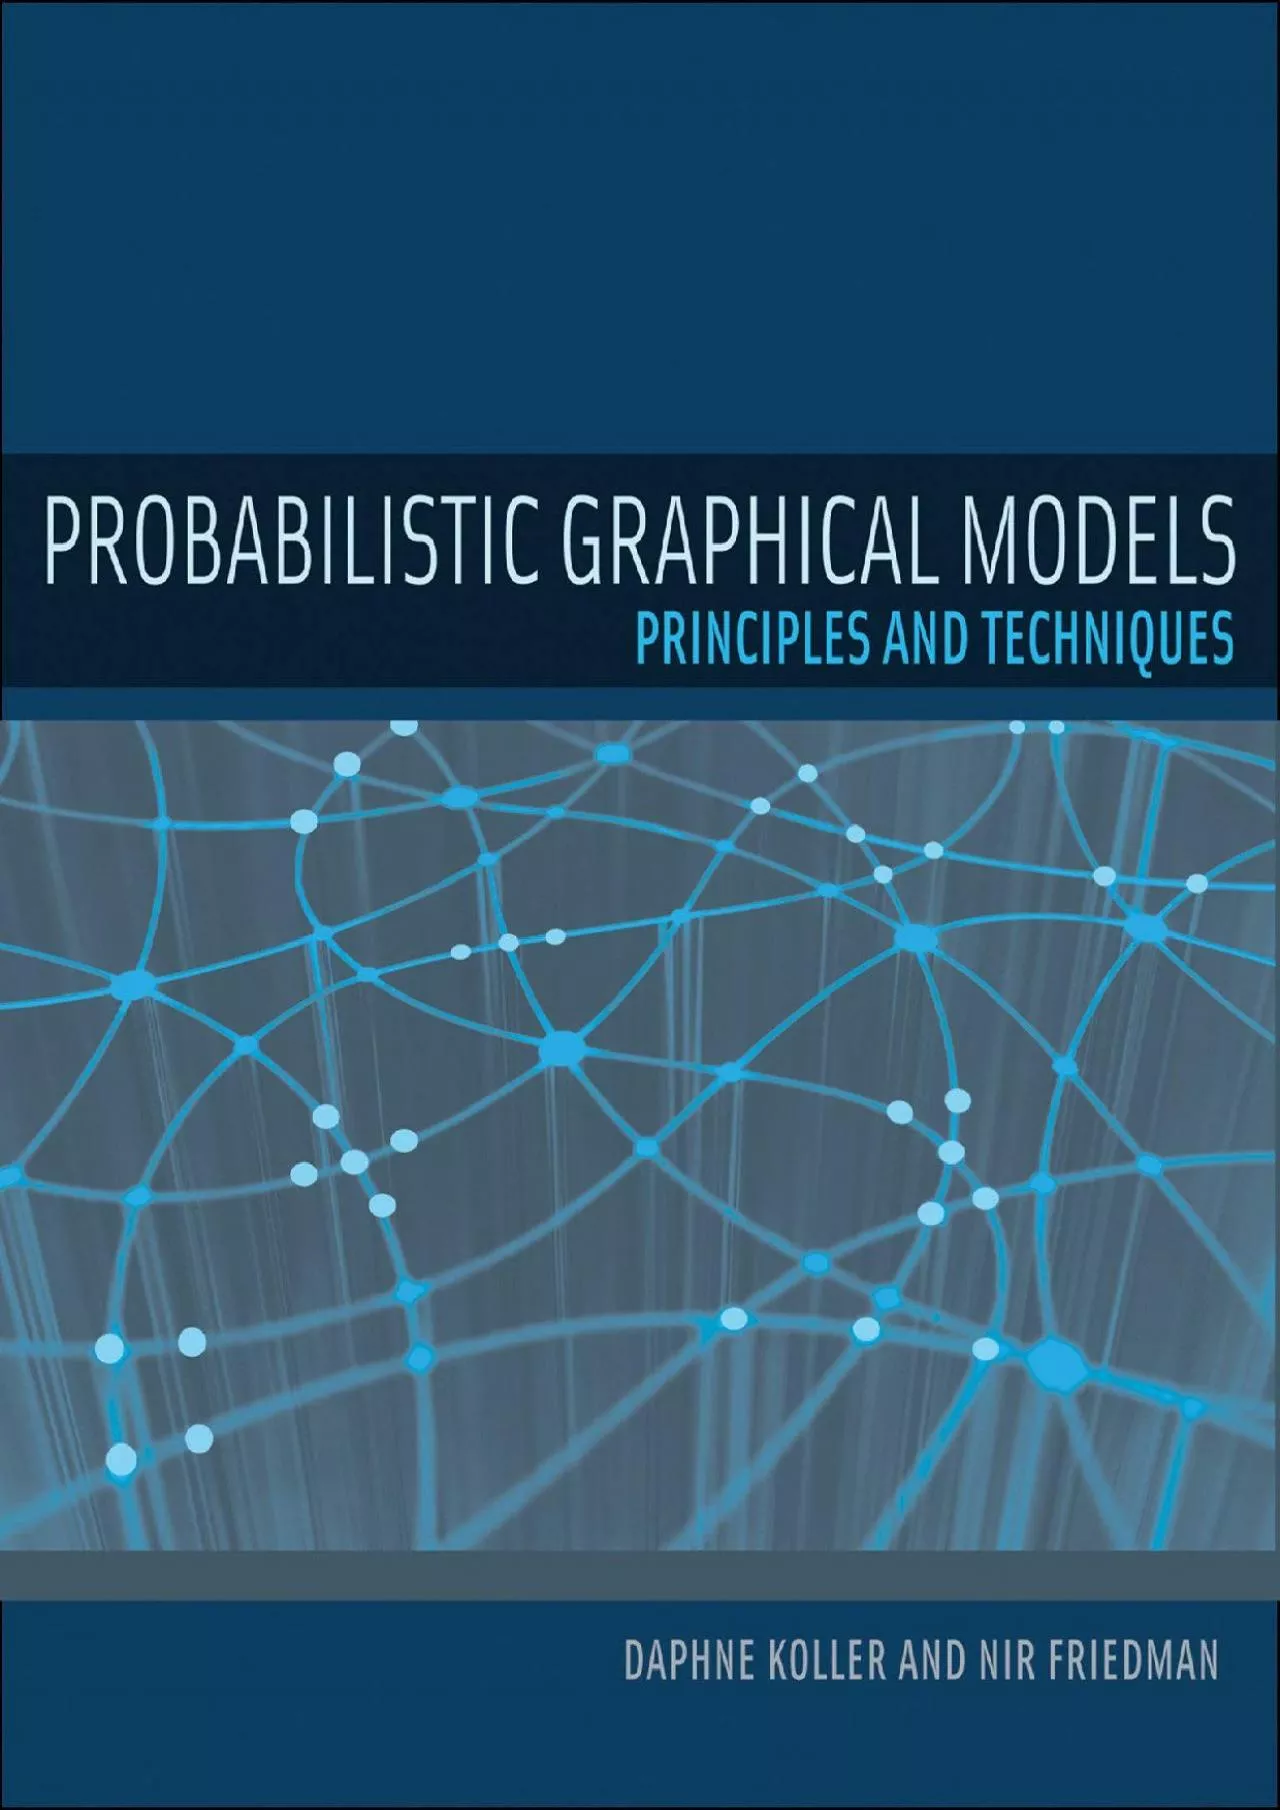 (BOOK)-Probabilistic Graphical Models: Principles and Techniques (Adaptive Computation